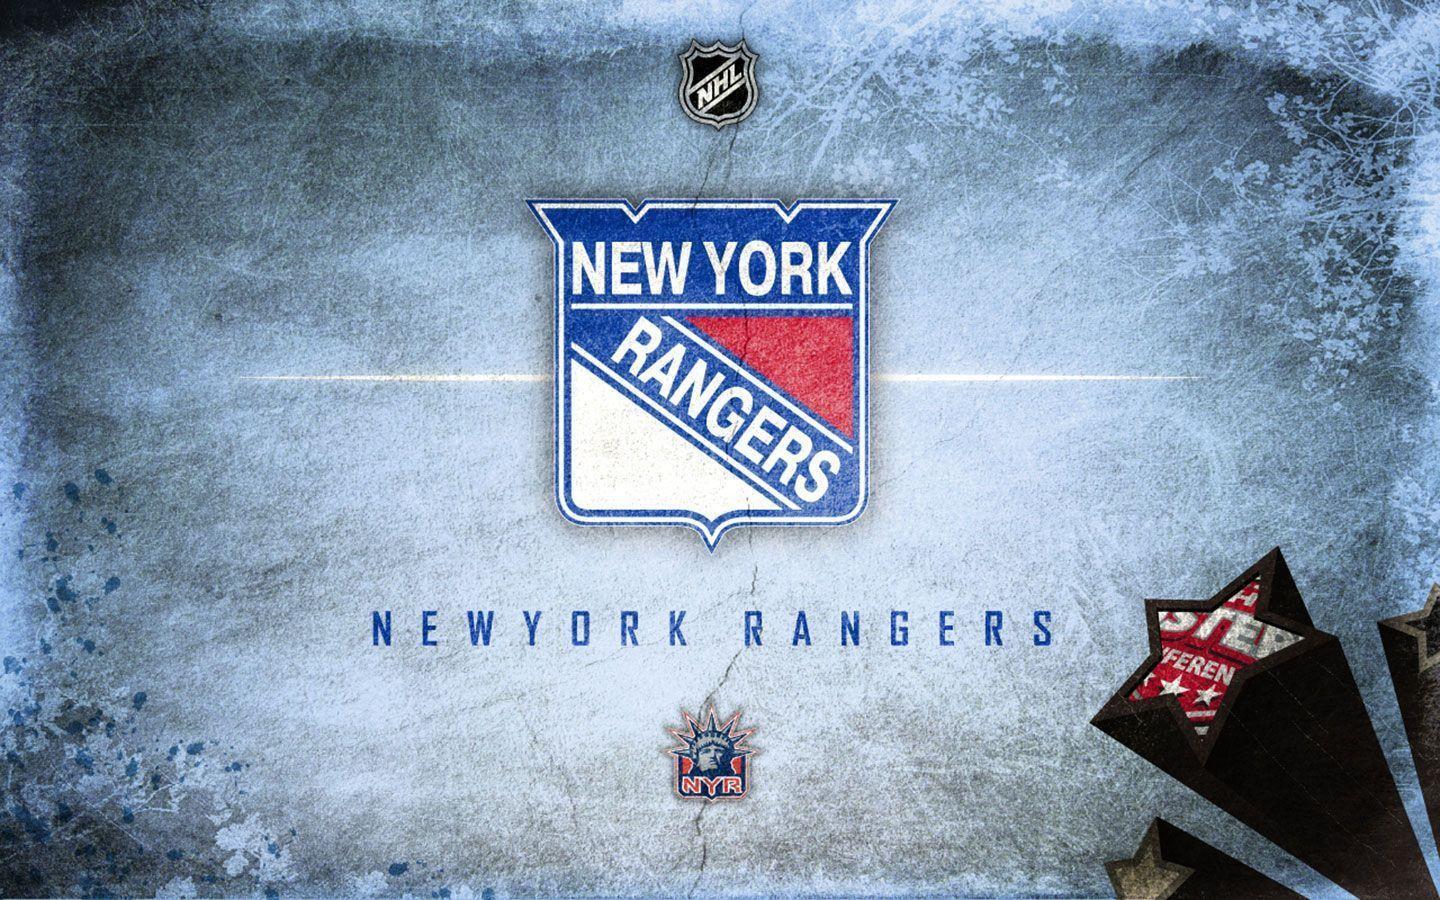 NHL New York Rangers Blue City Wallpaper by Realyze on DeviantArt